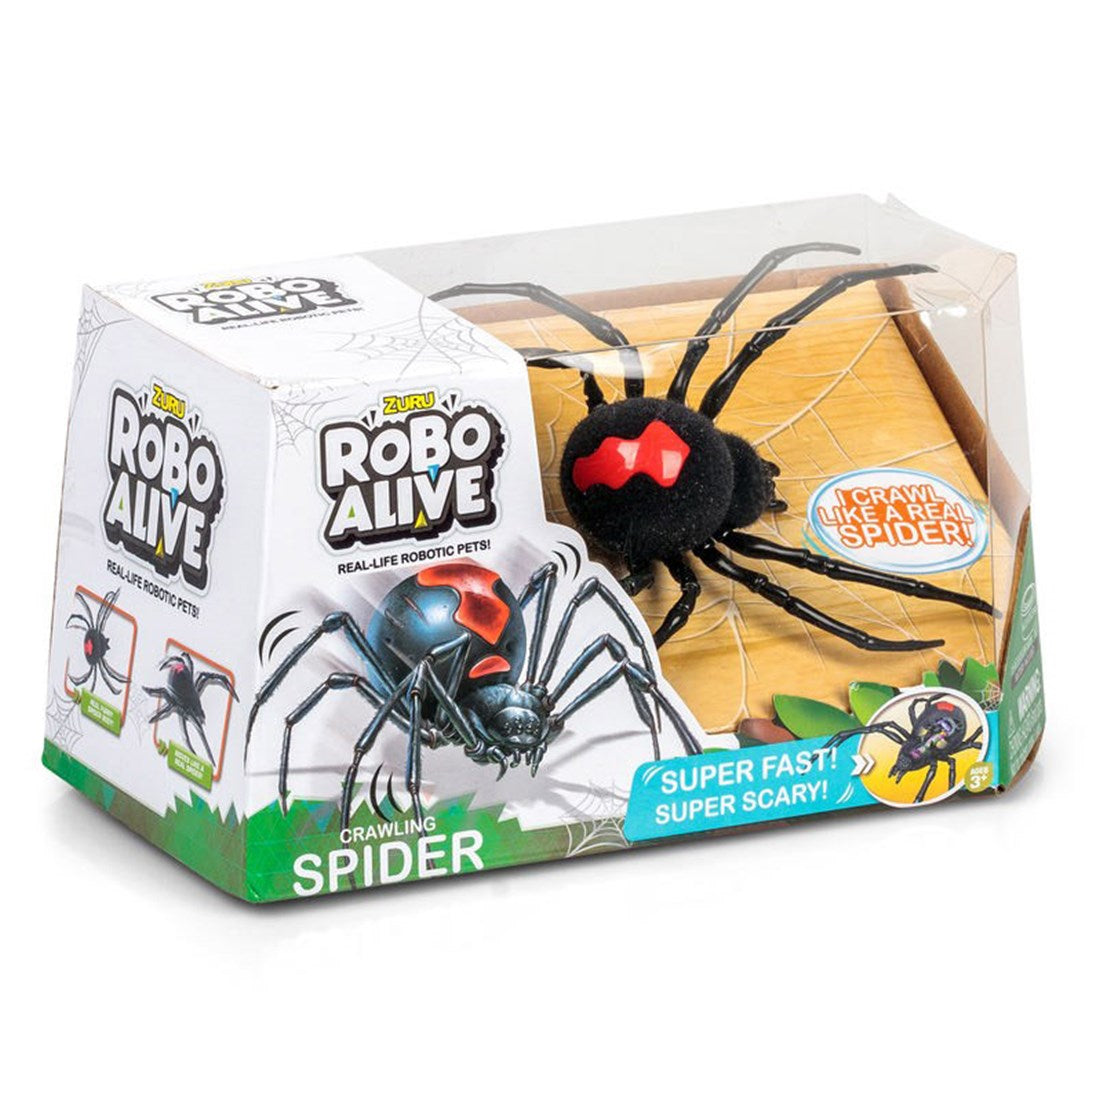 Robo Alive hämähäkki